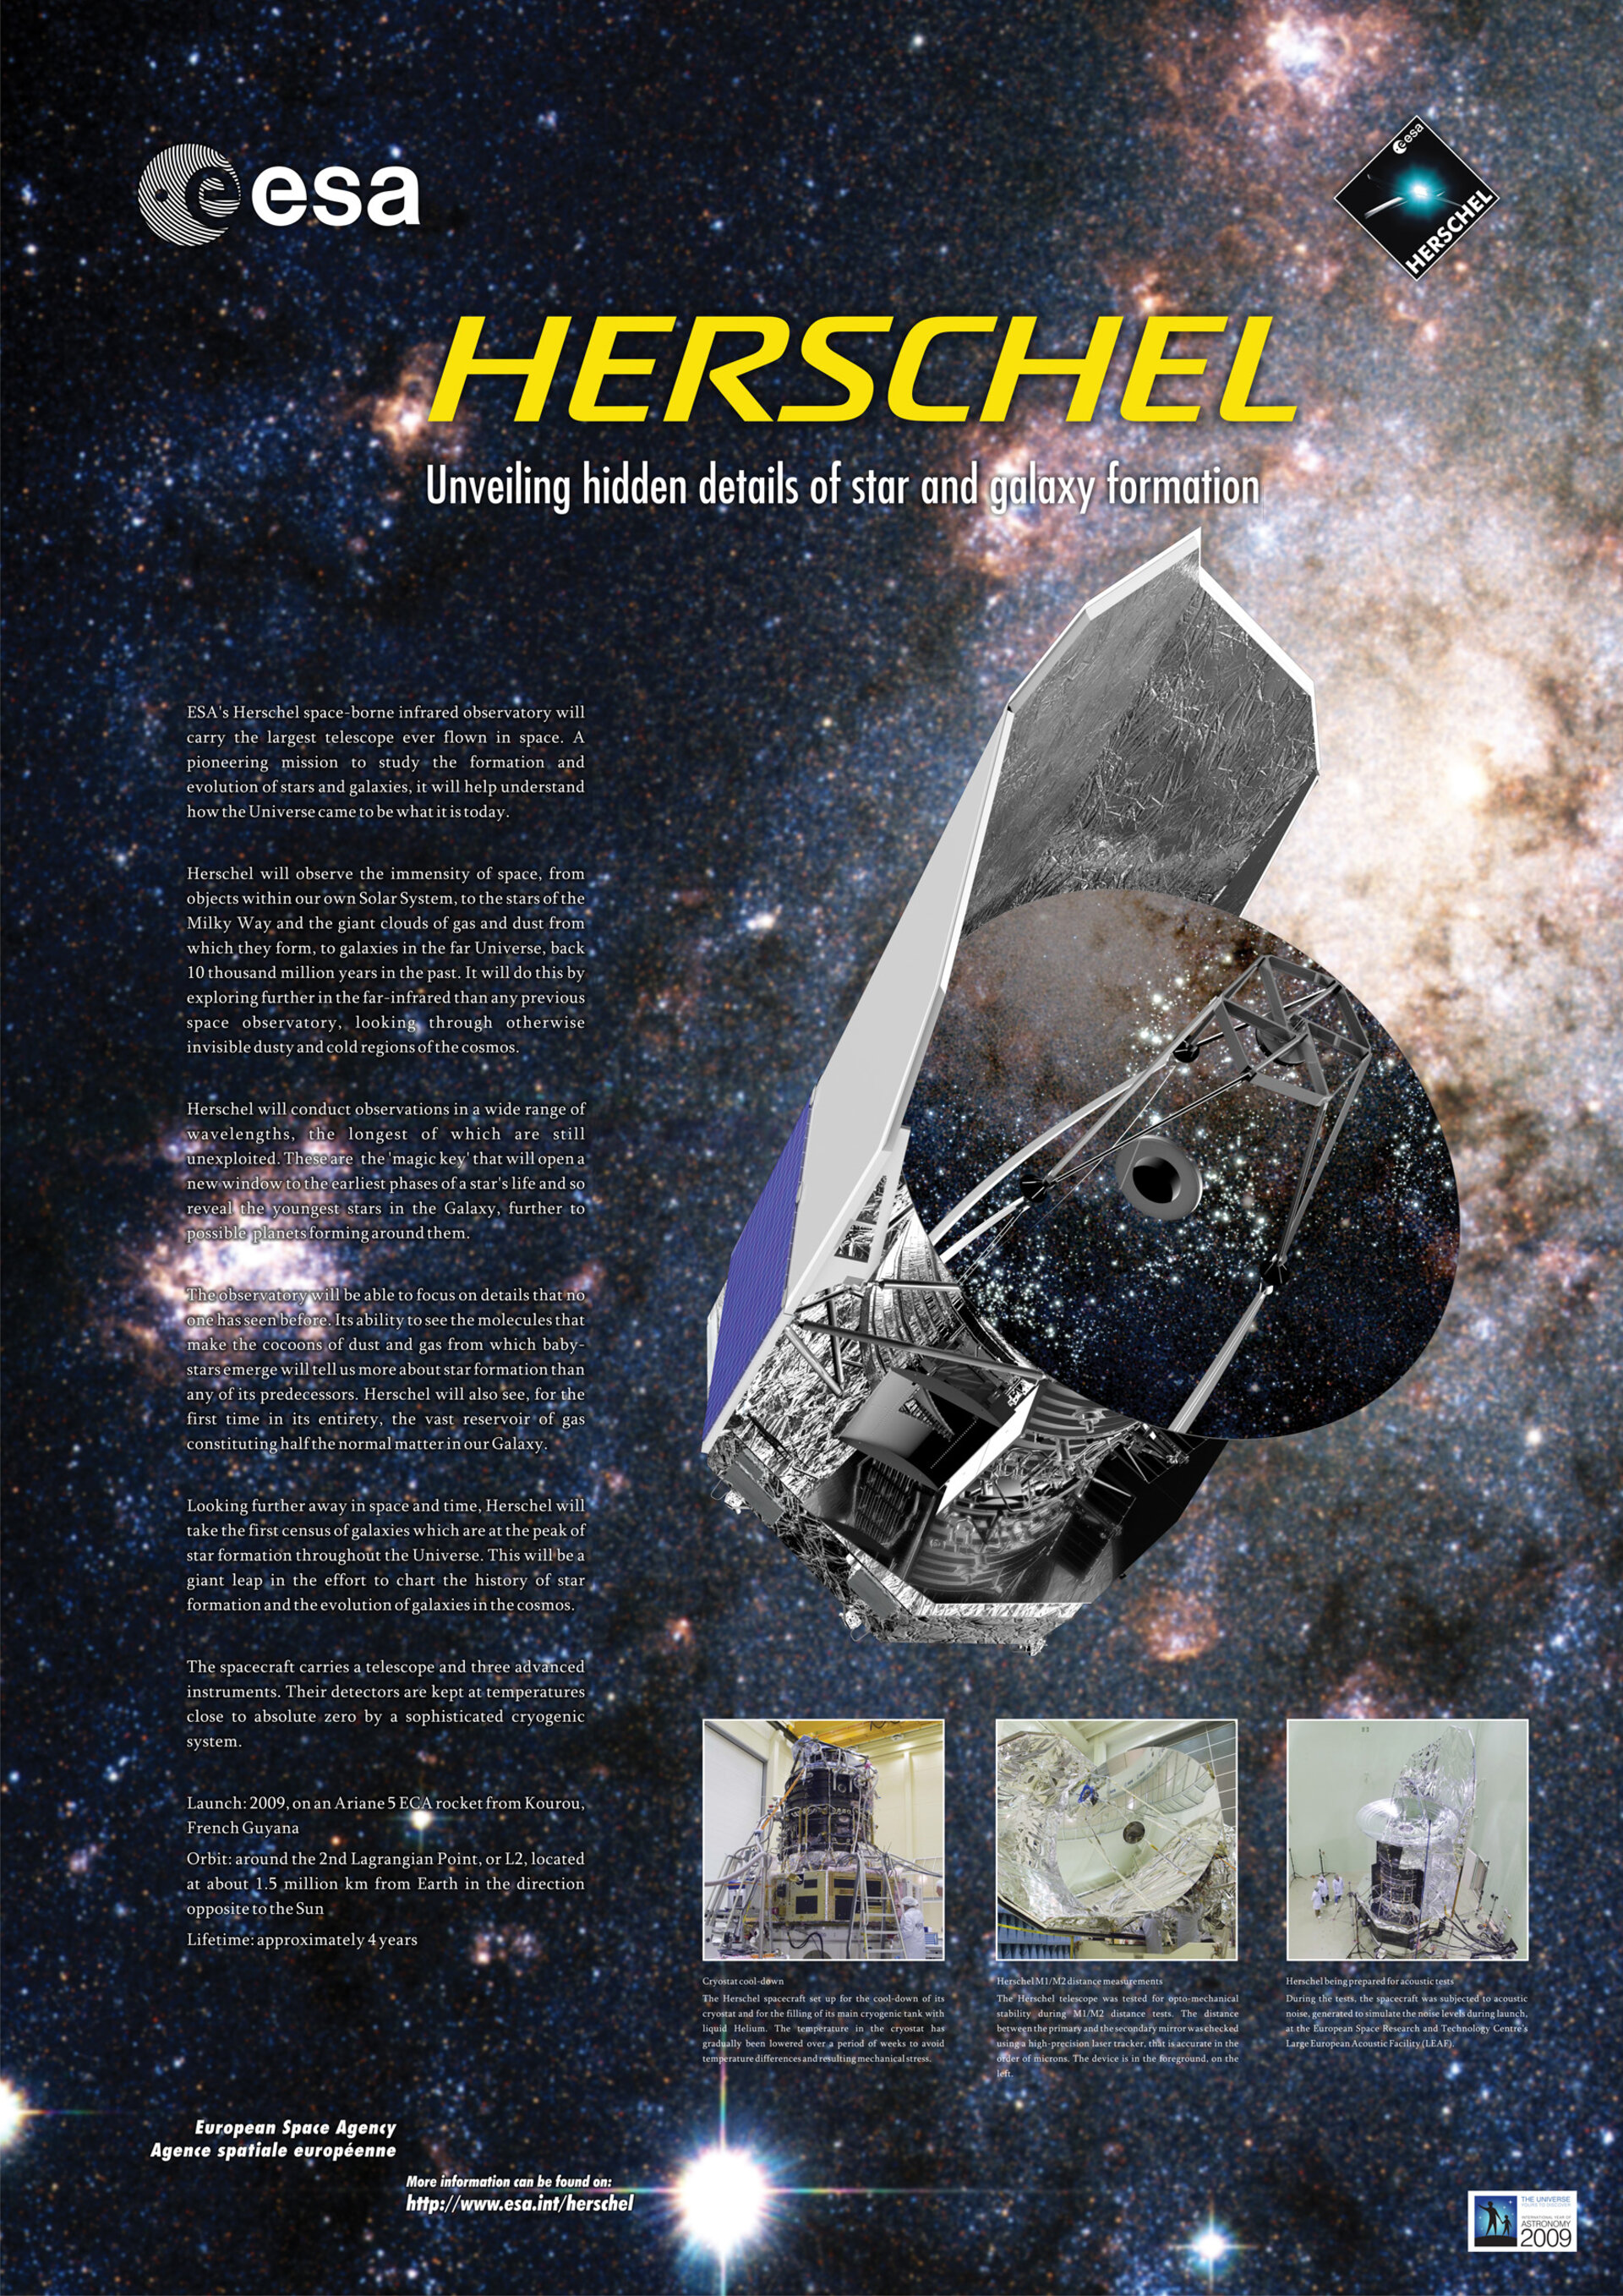 ESA - Herschel - Hoja resumen de la misión